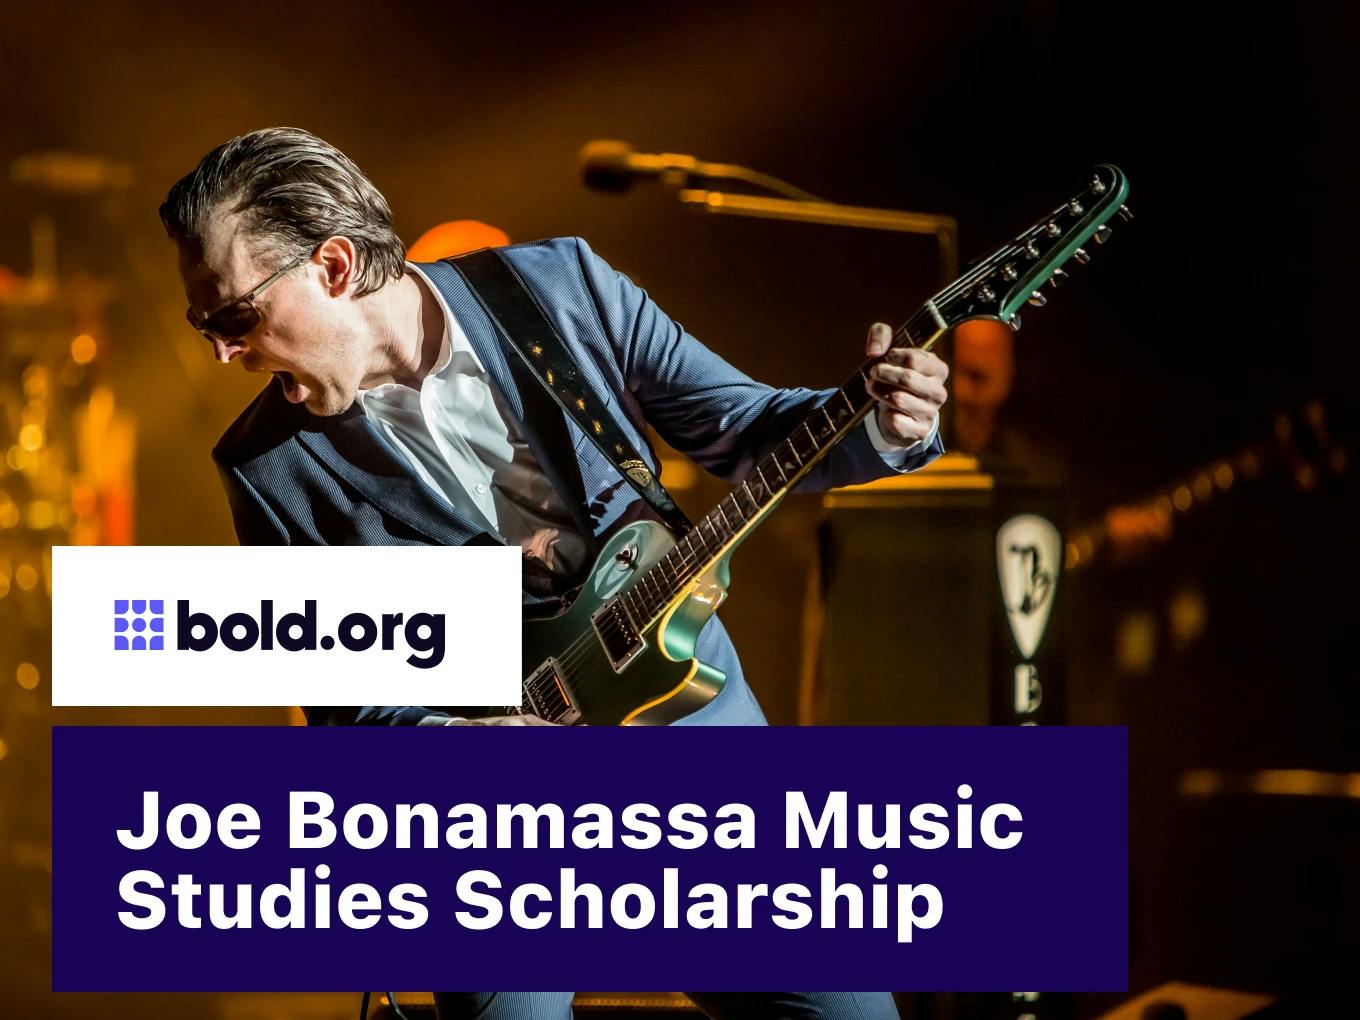 Joe Bonamassa Music Studies Scholarship